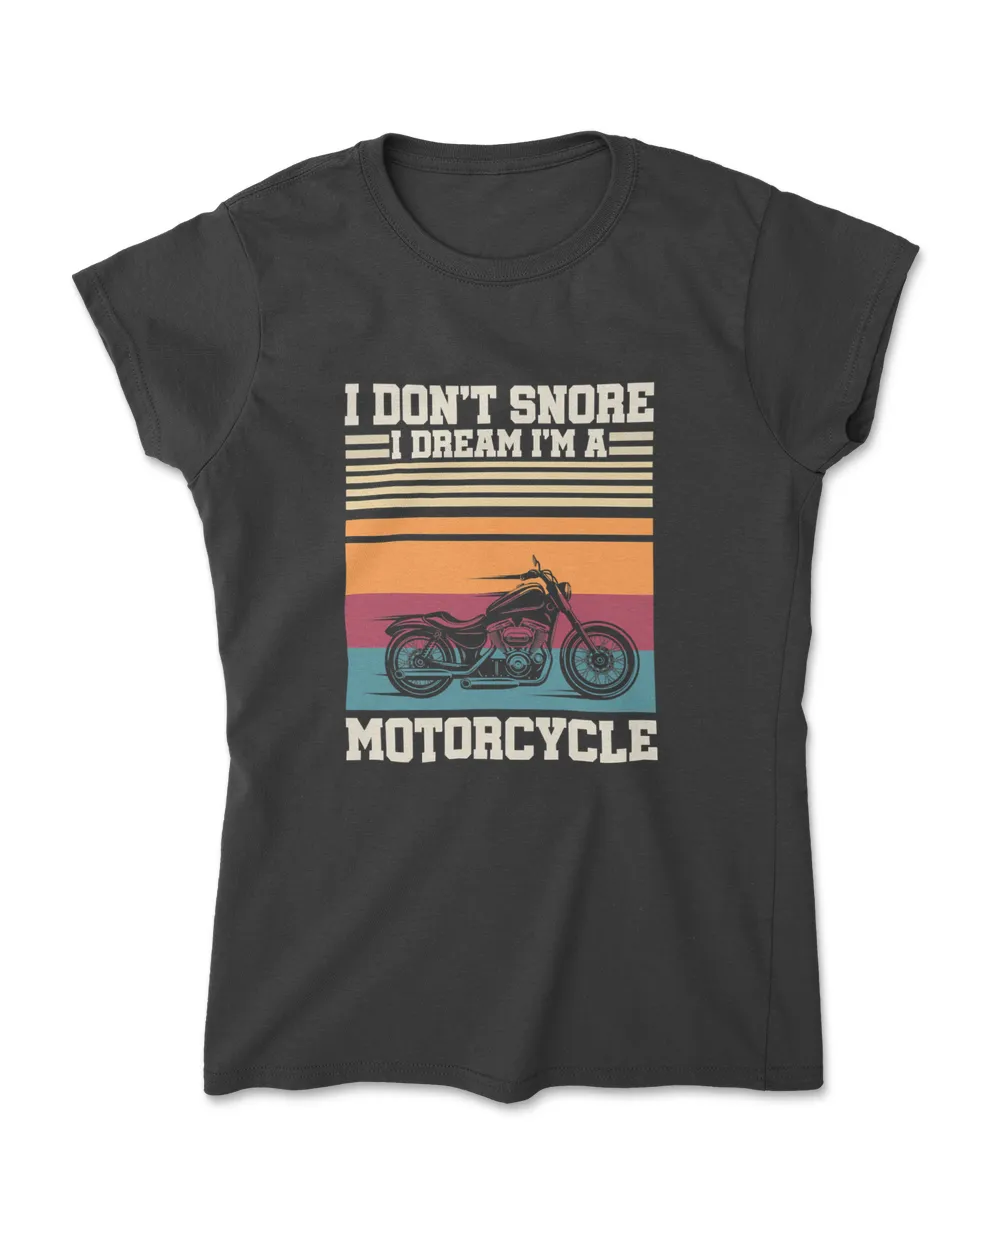 I Dont Snore I Dream Im A Motorcycle Funny Sport Retro Biker T-Shirt